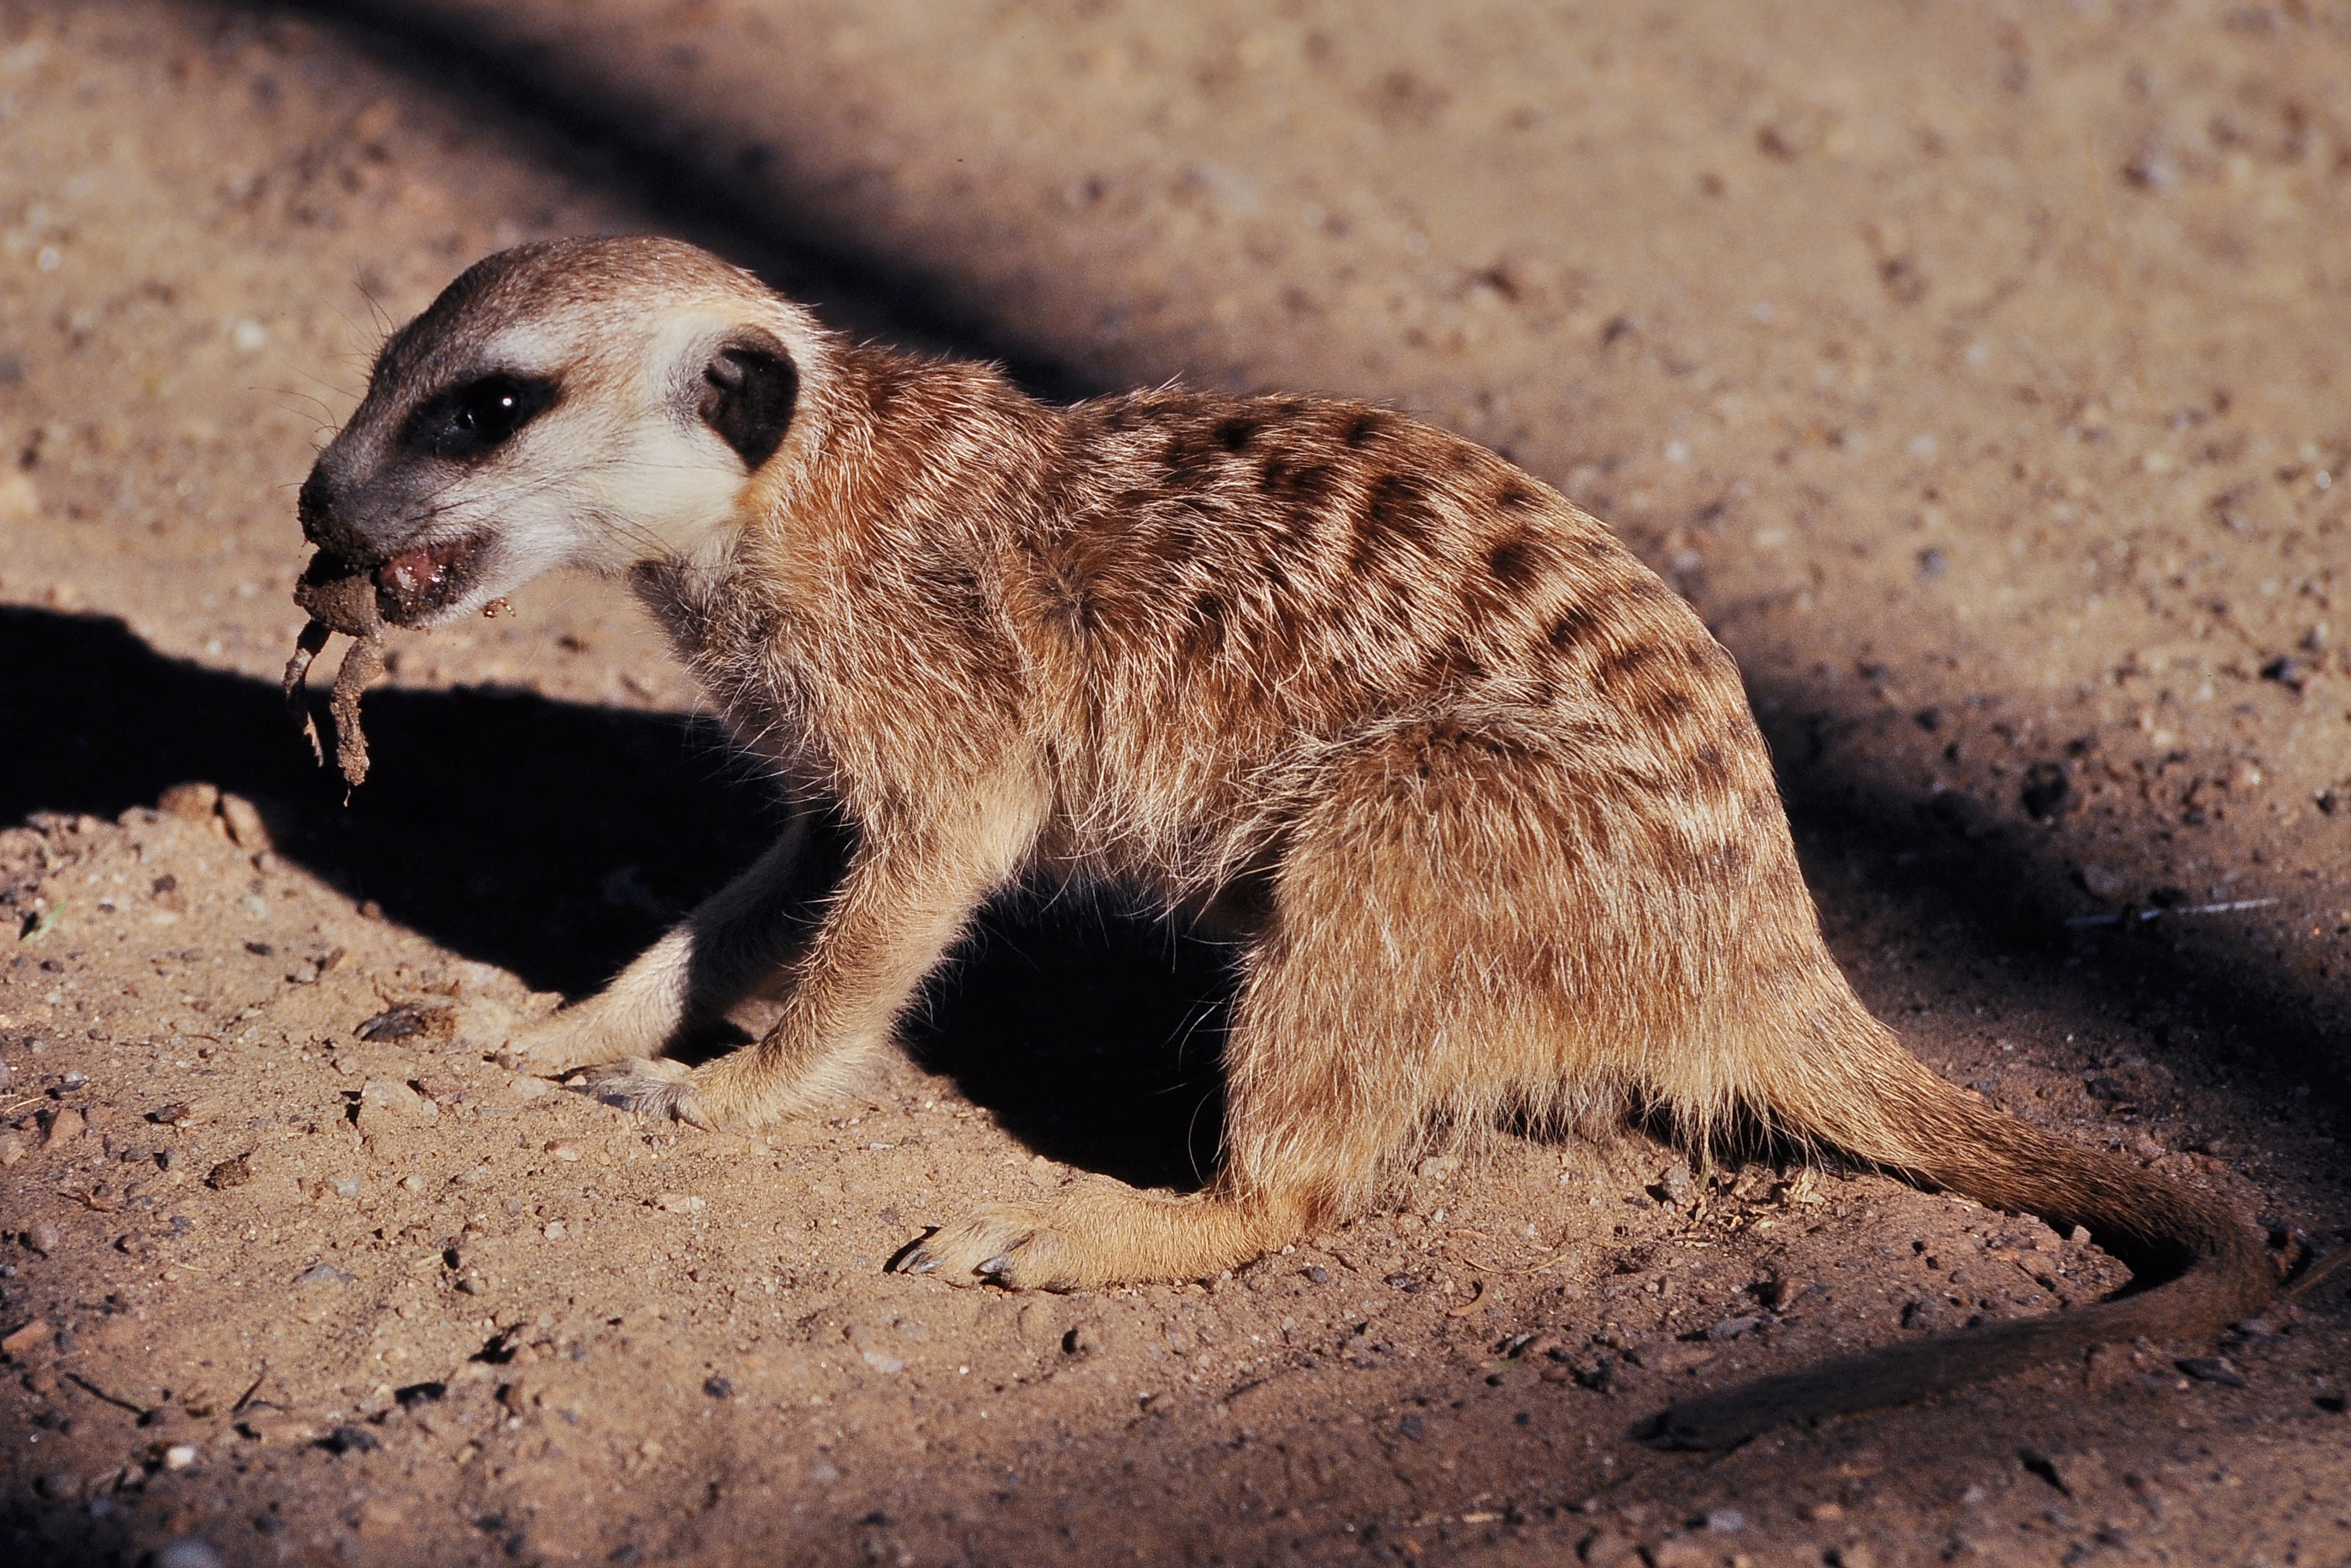 File:Meerkat in Namibia.jpg - Wikimedia Commons